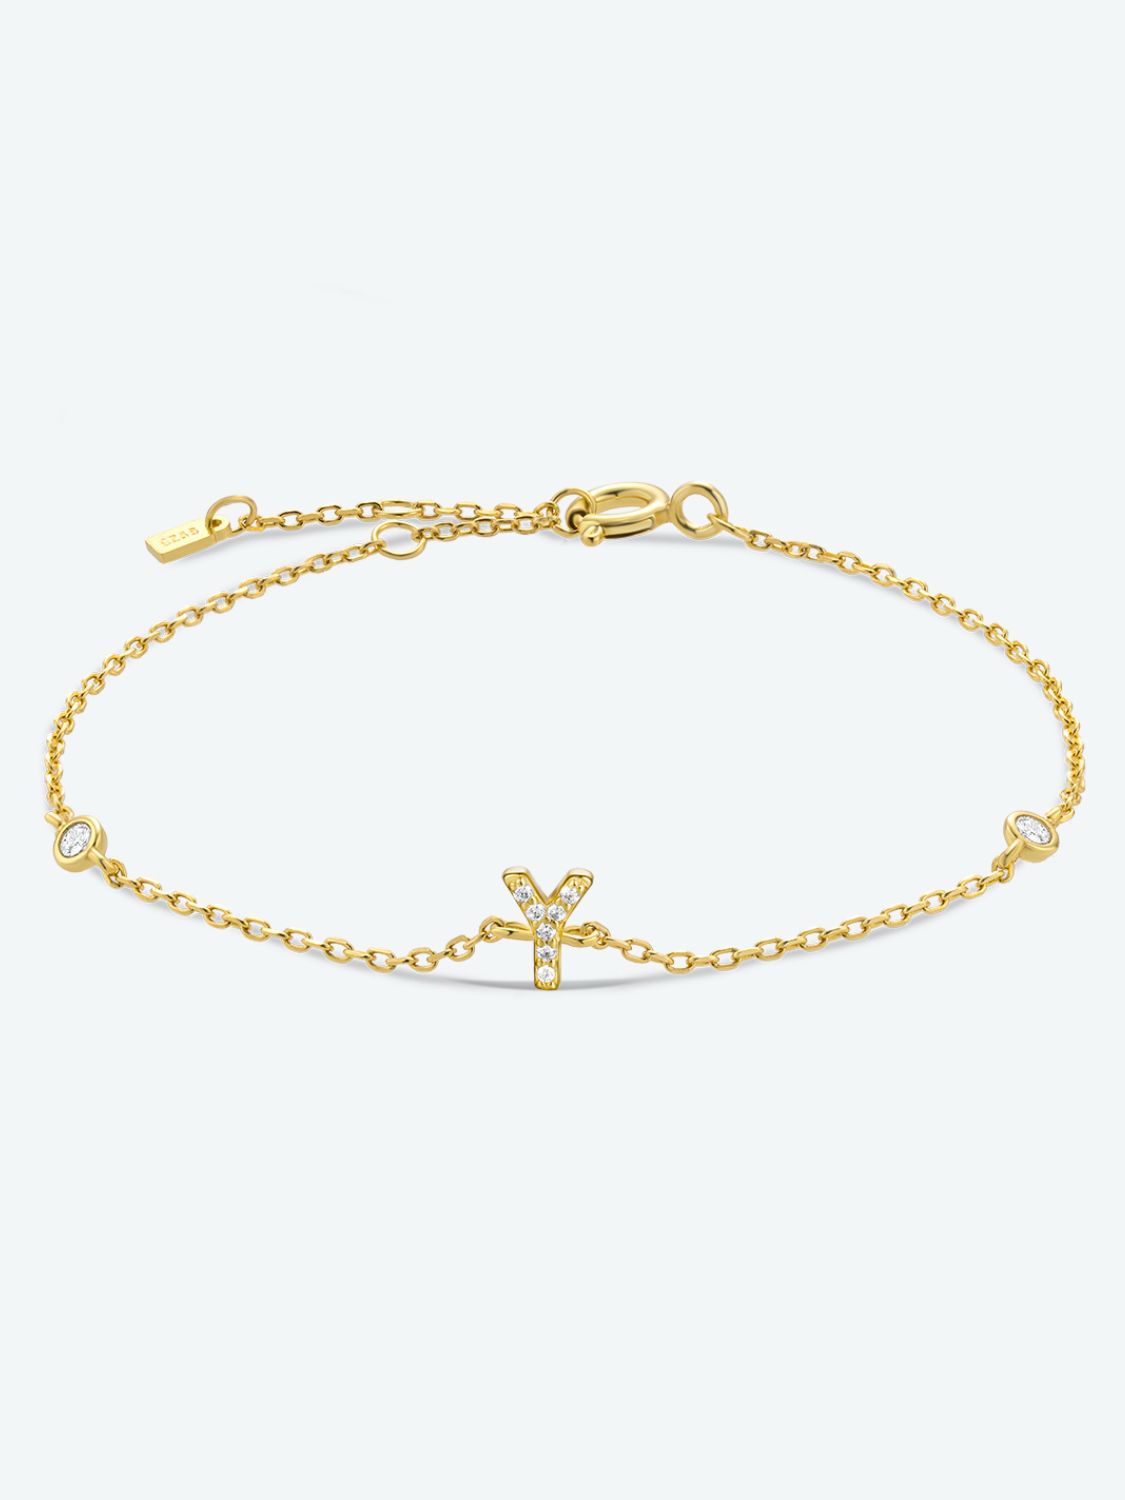 V To Z Zircon 925 Sterling Silver Bracelet - Y/Gold / One Size - Women’s Jewelry - Bracelets - 19 - 2024